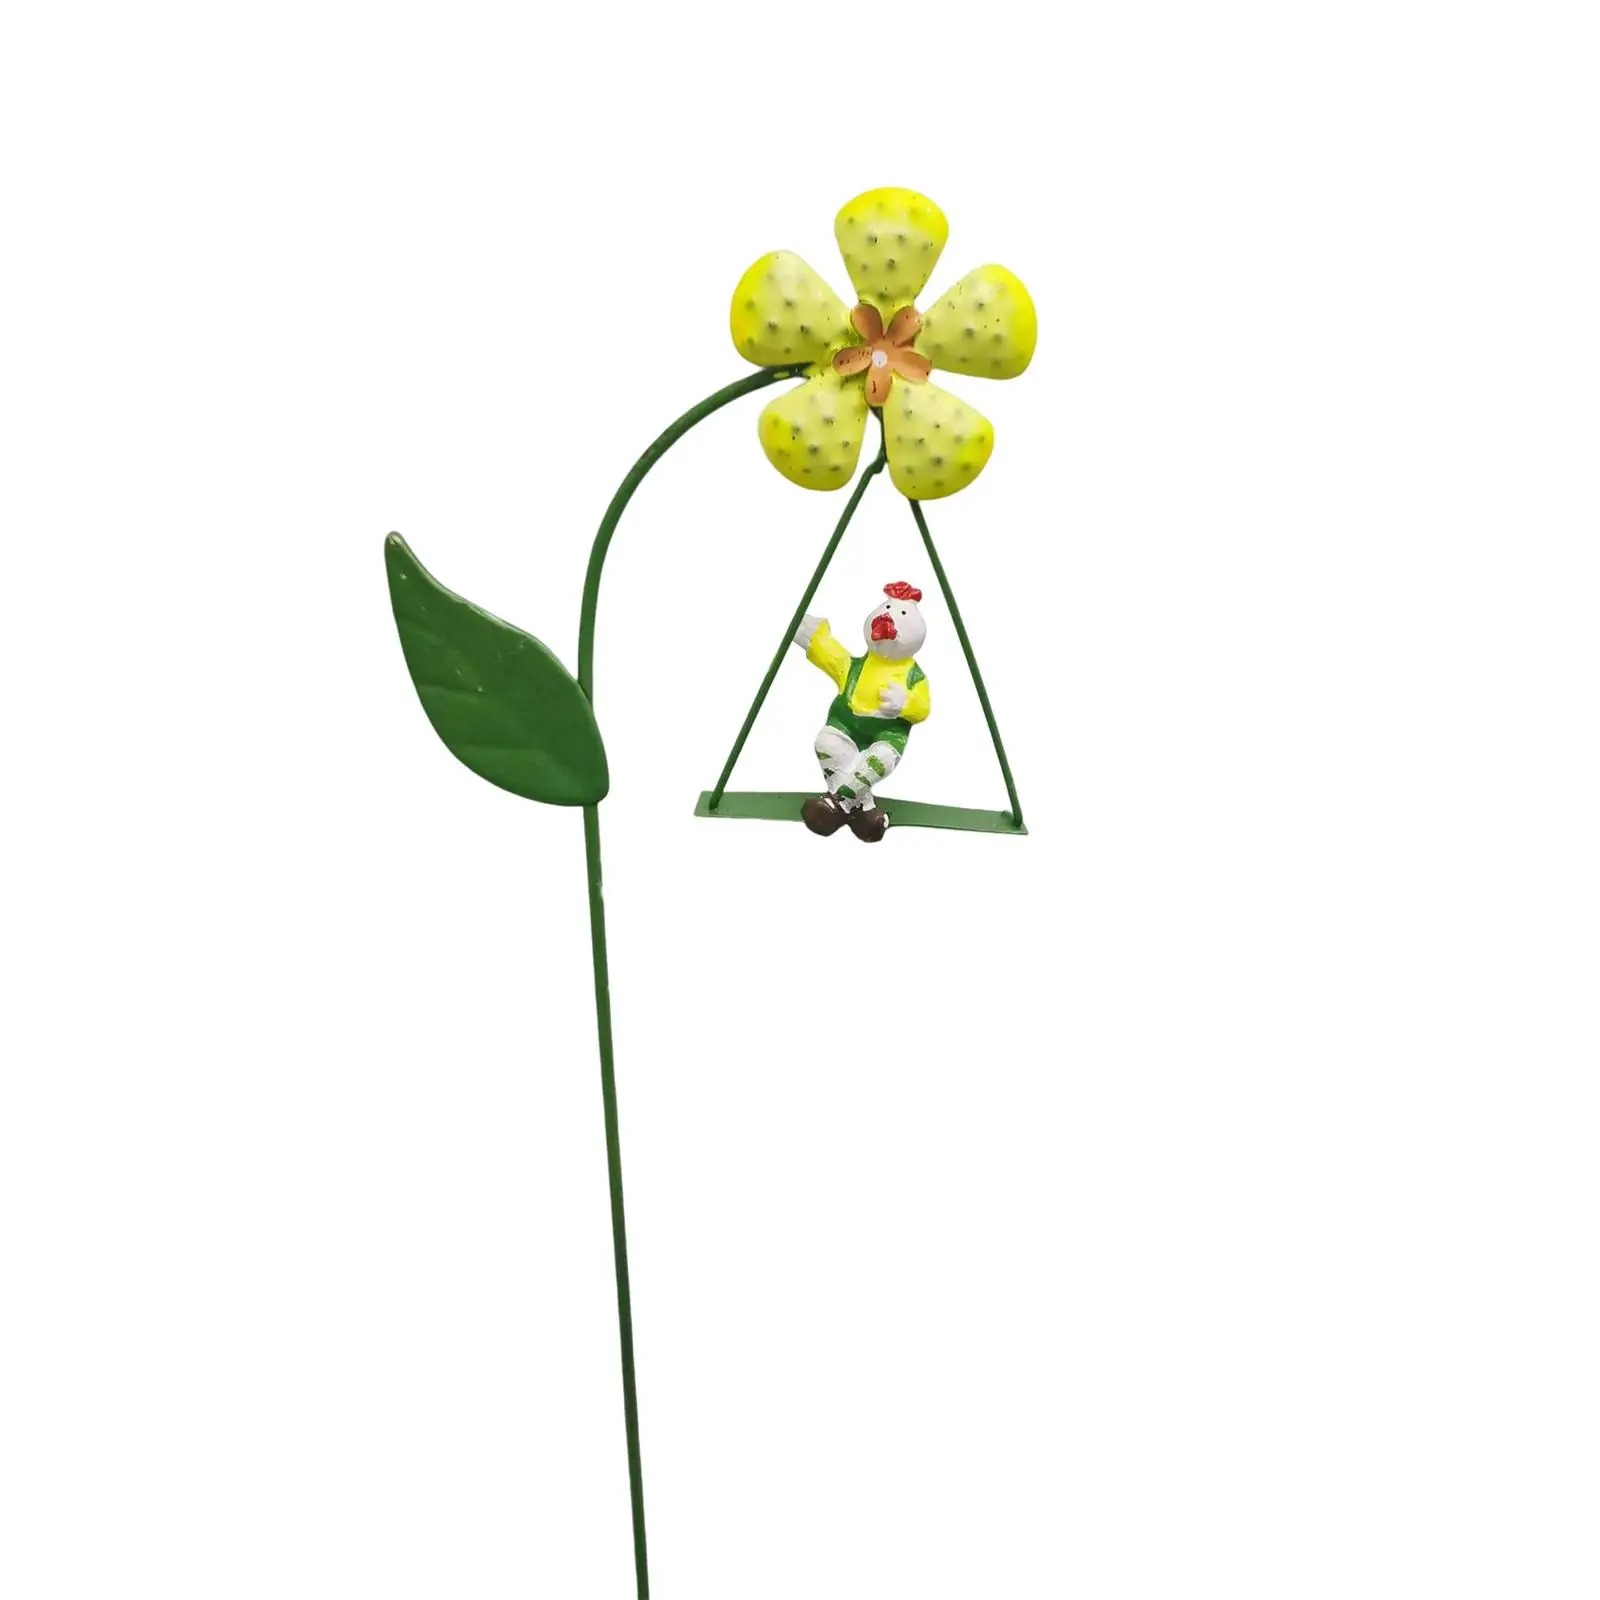 Imitation Plant Flower Decor, Swing Ornament, Creative Iron Artificial Miniature